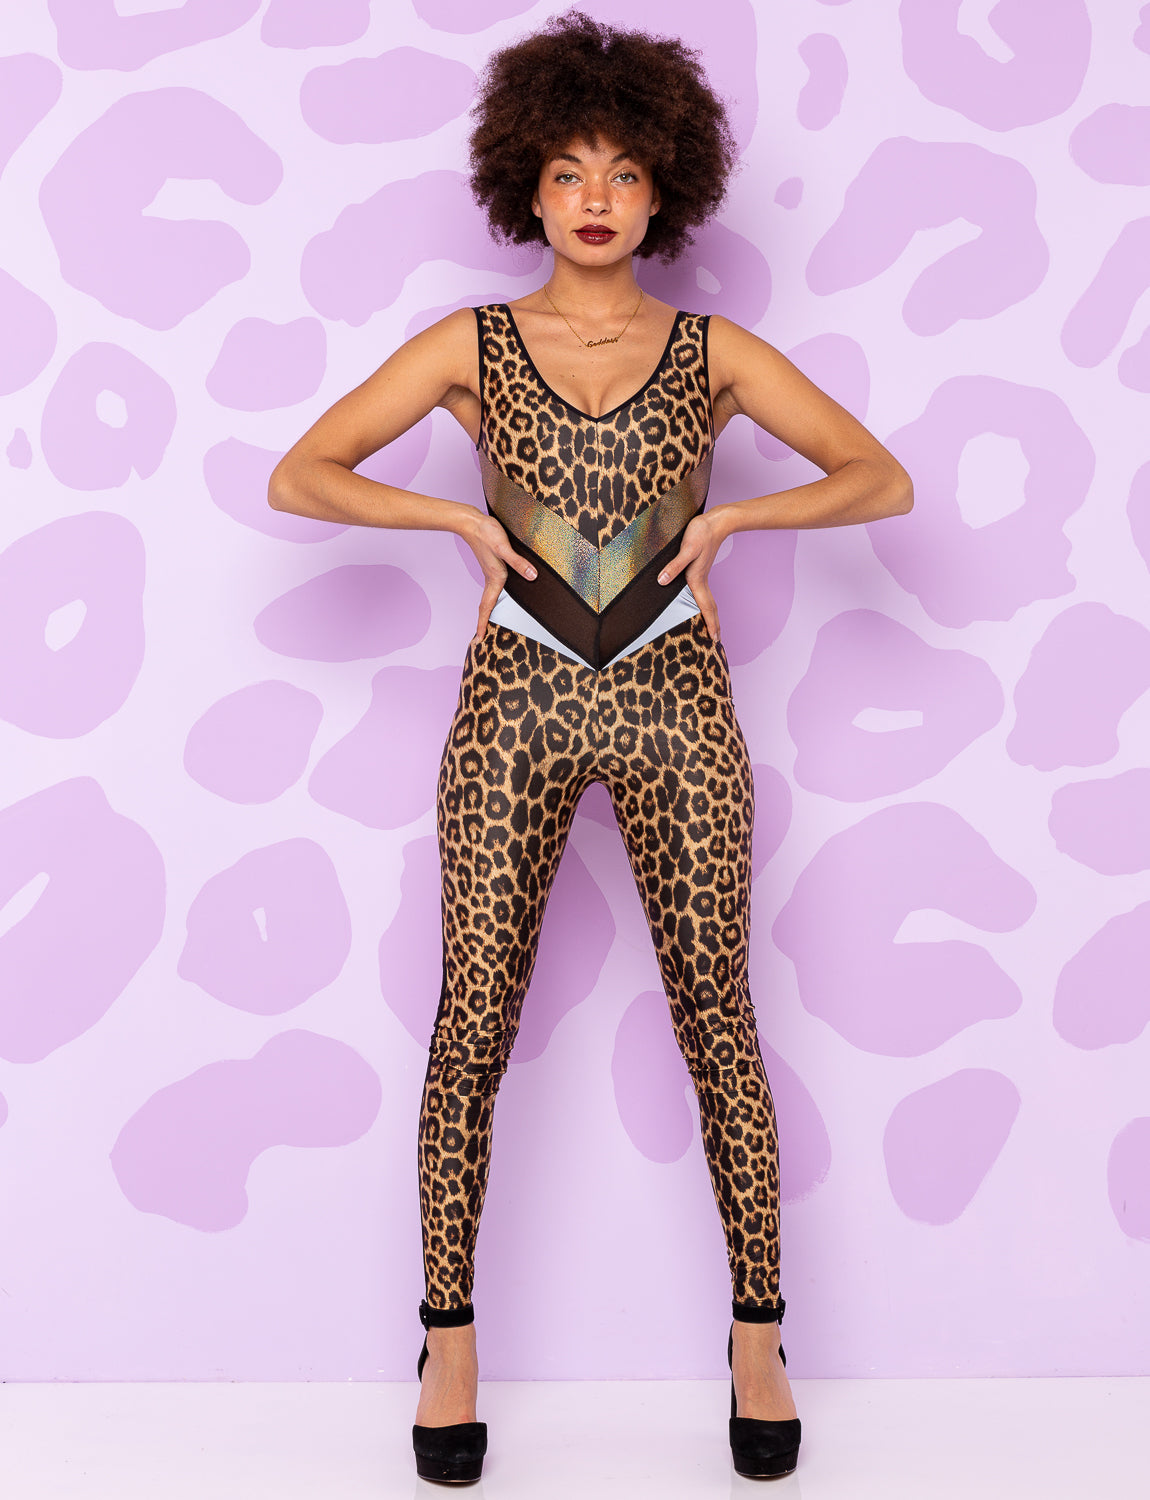 woman wearing a leopard print catsuit